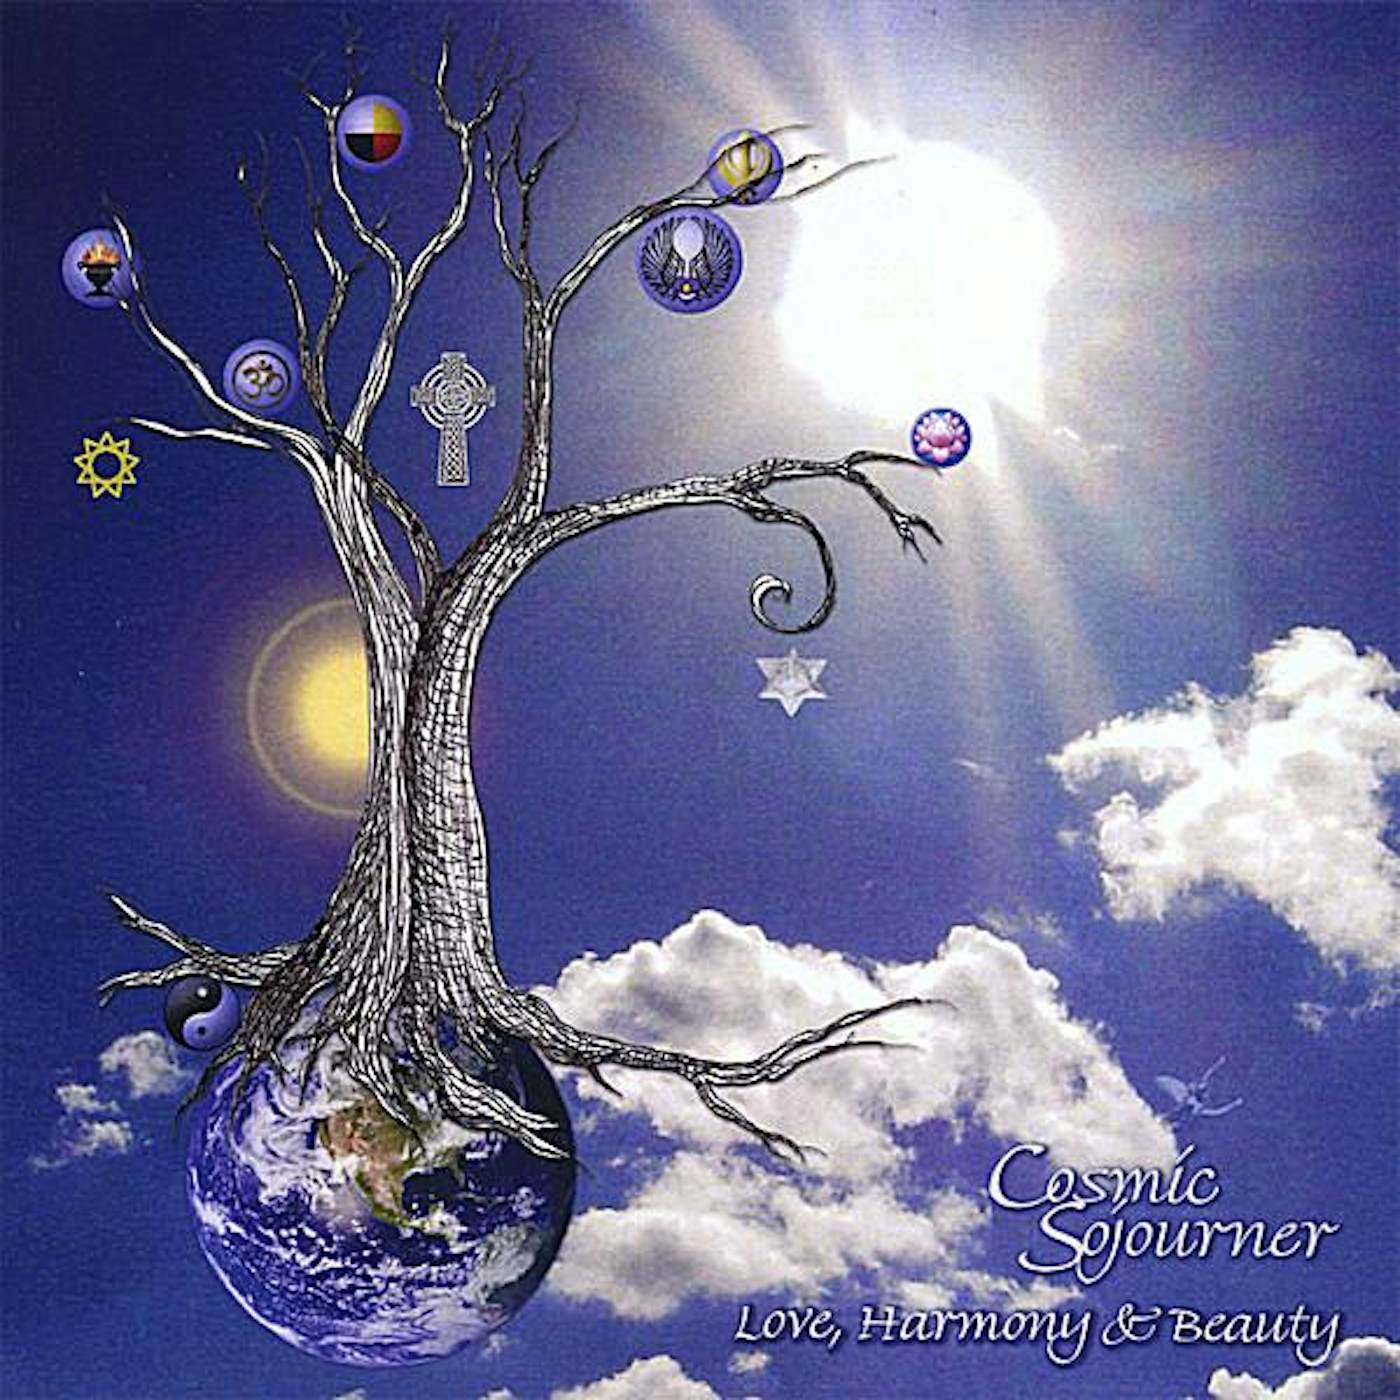 Cosmic Sojourner LOVE HARMONY & BEAUTY CD